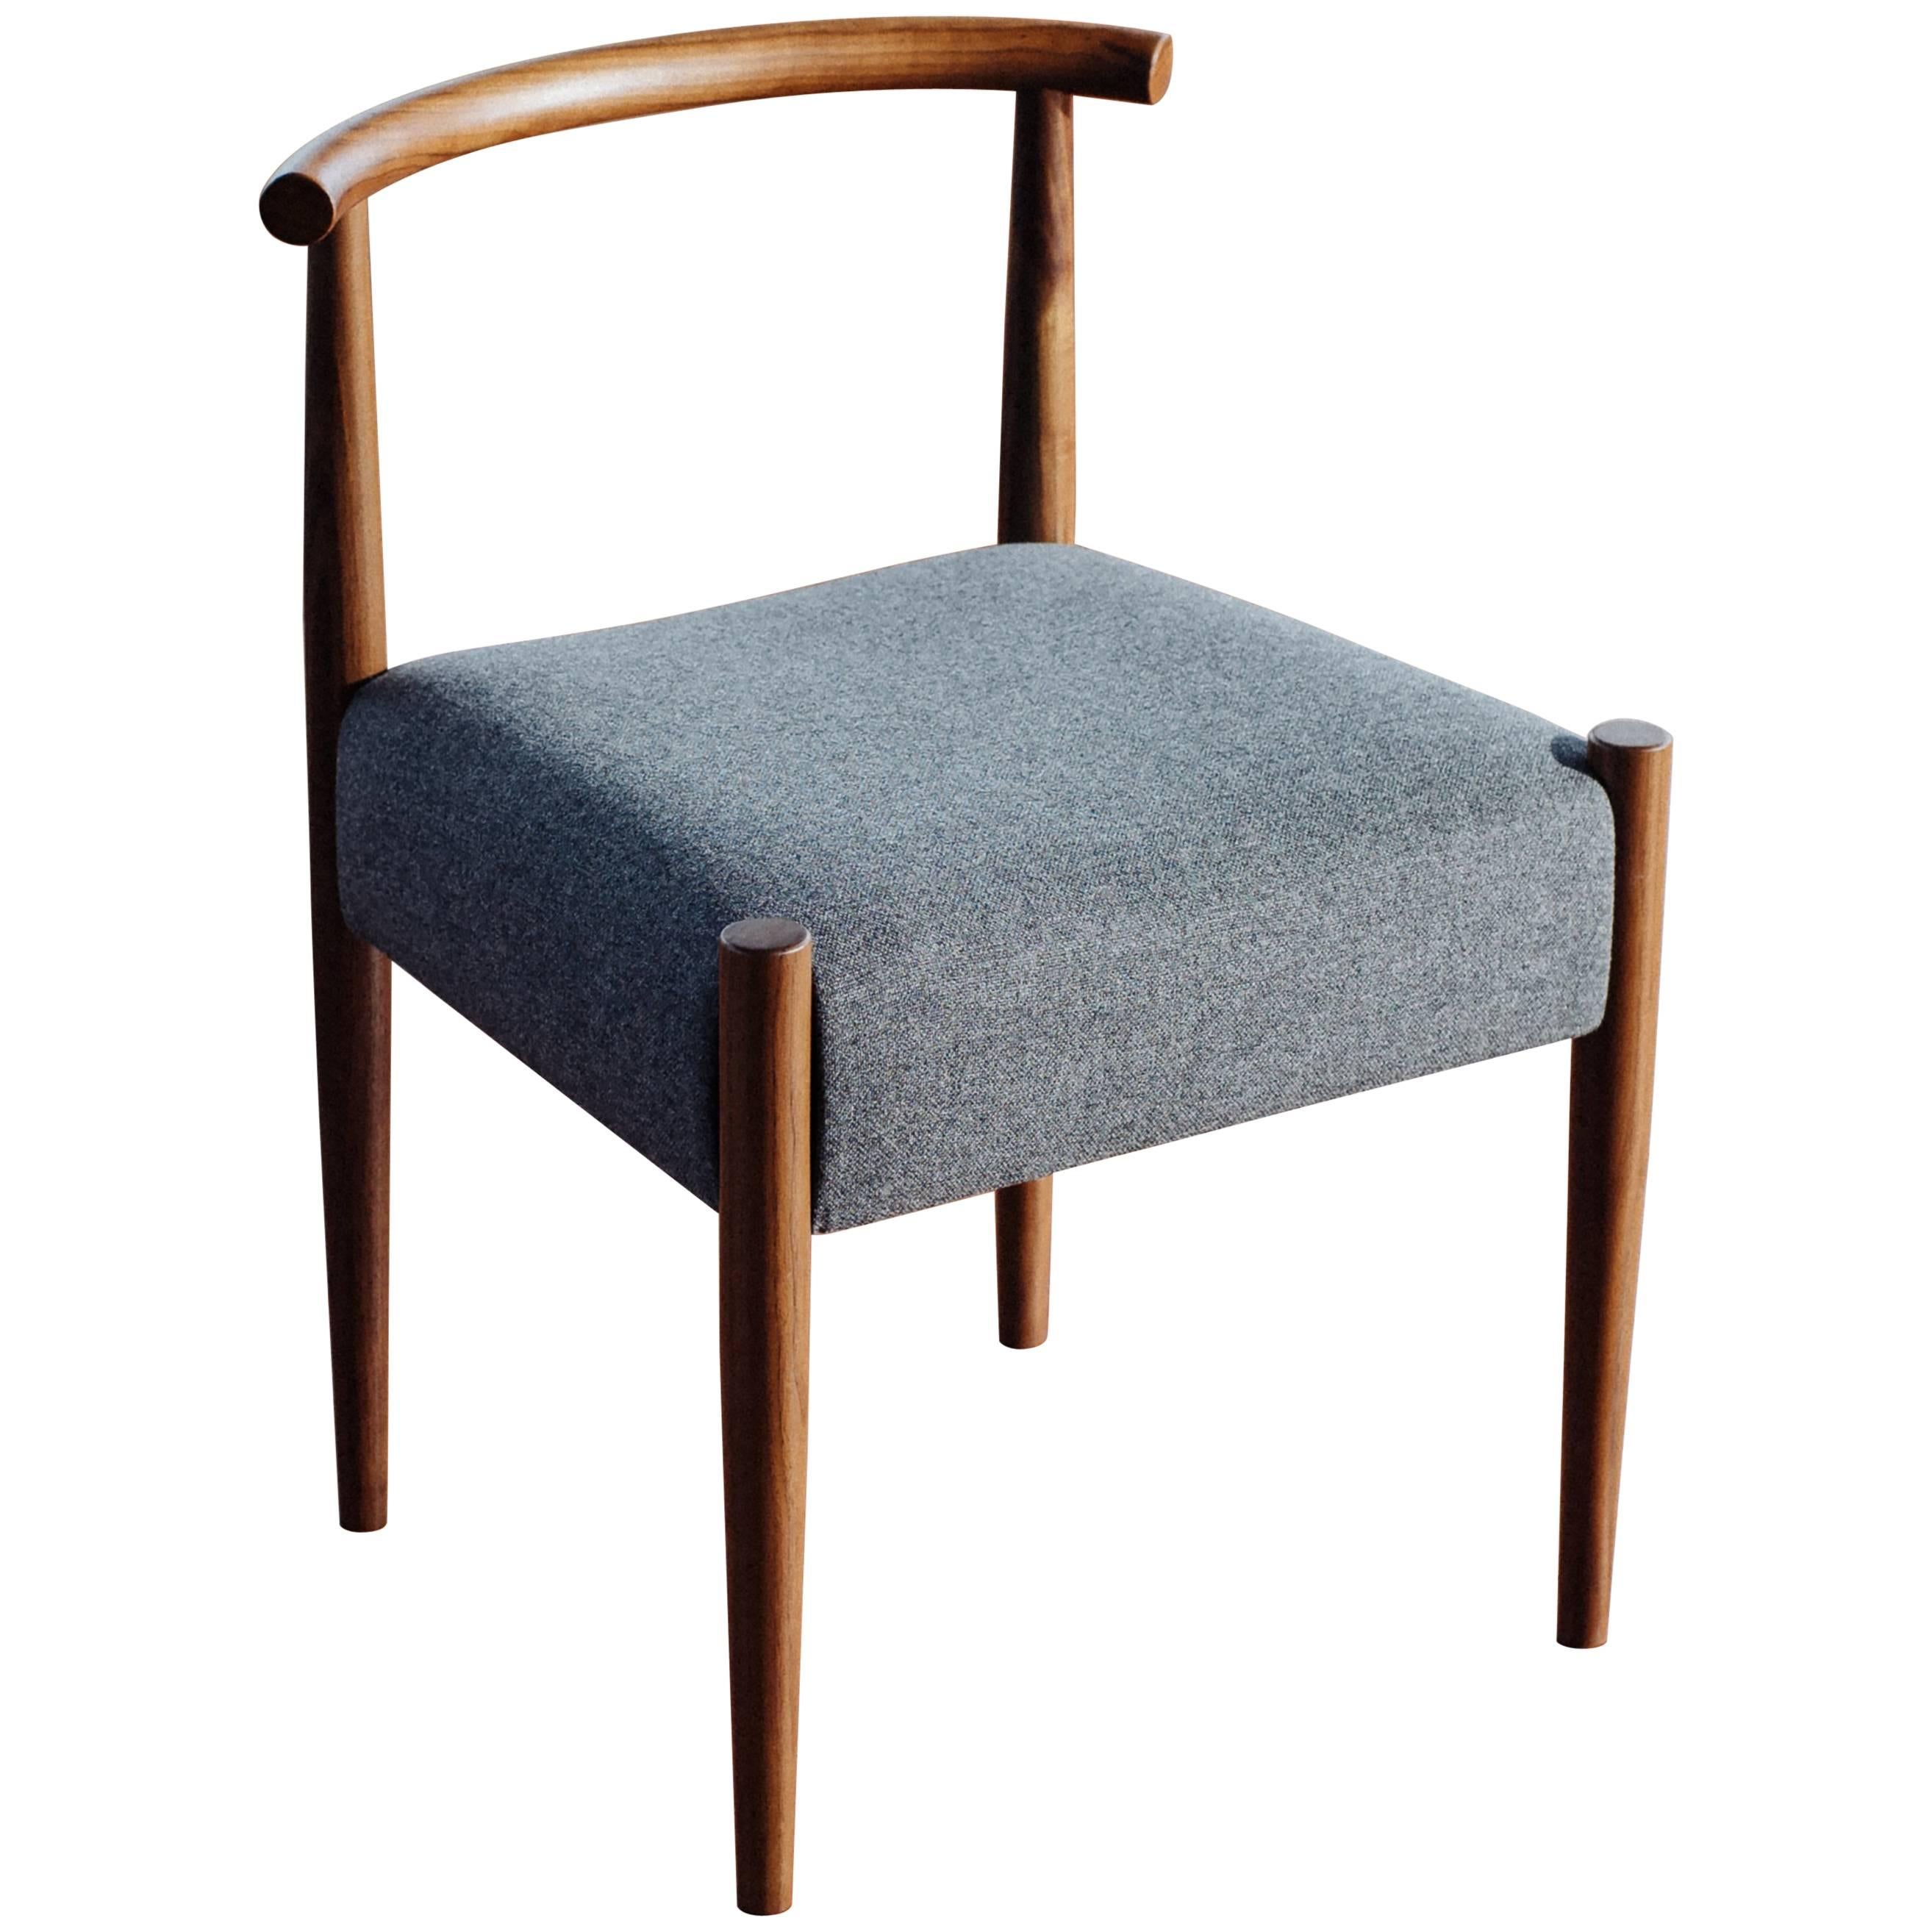 Phloem Studio Harbor Chair, Handmade Modern Side Chair with Wood and Upholstery